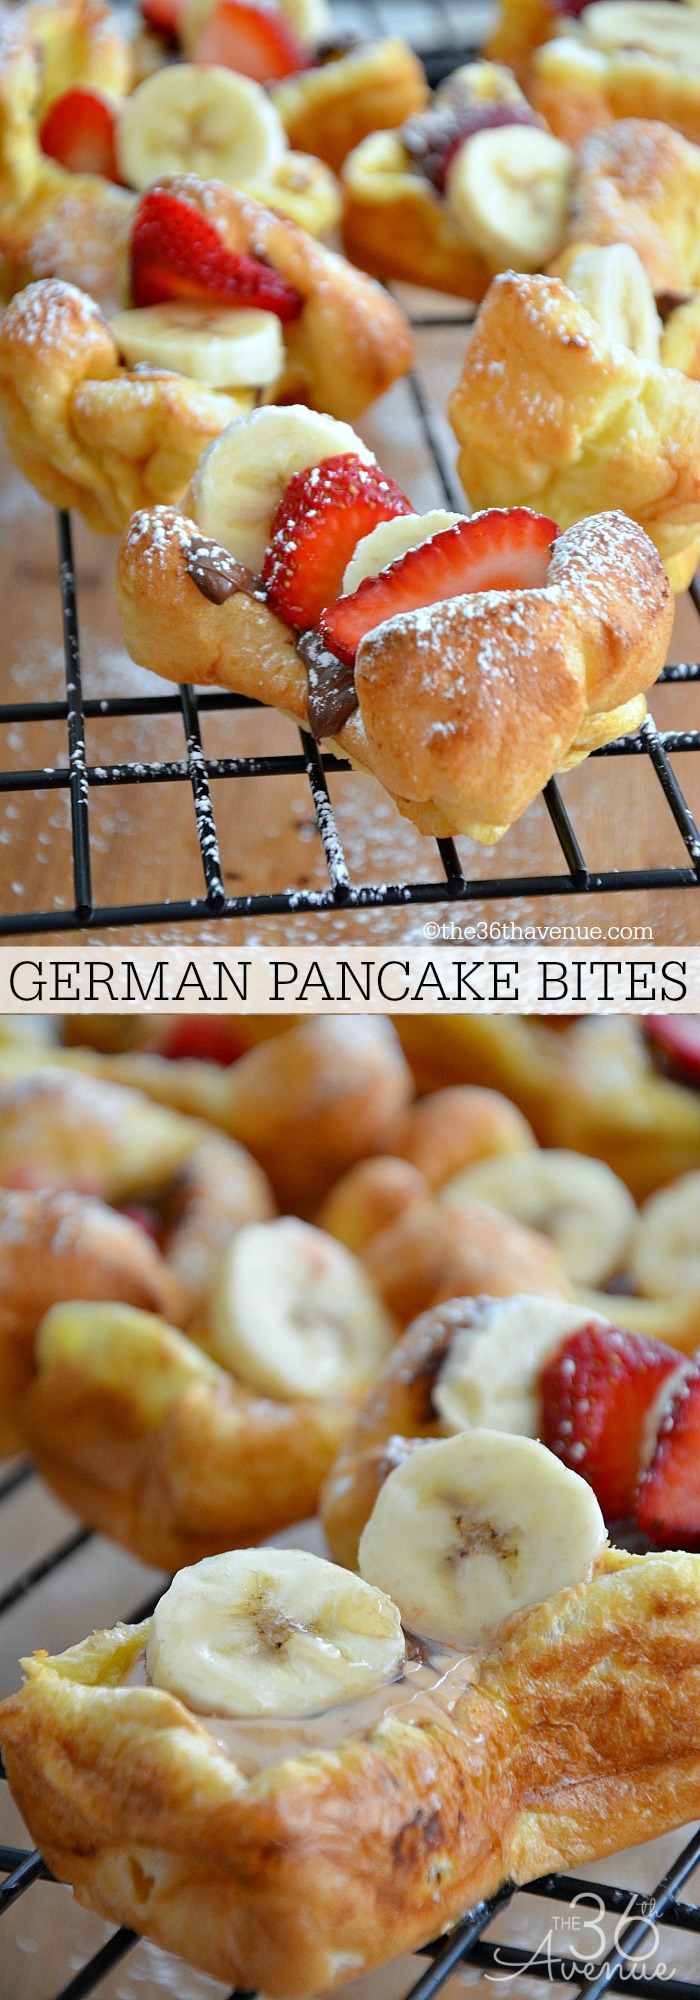 German Pancake Recipe Snacks at the36thavenue.com